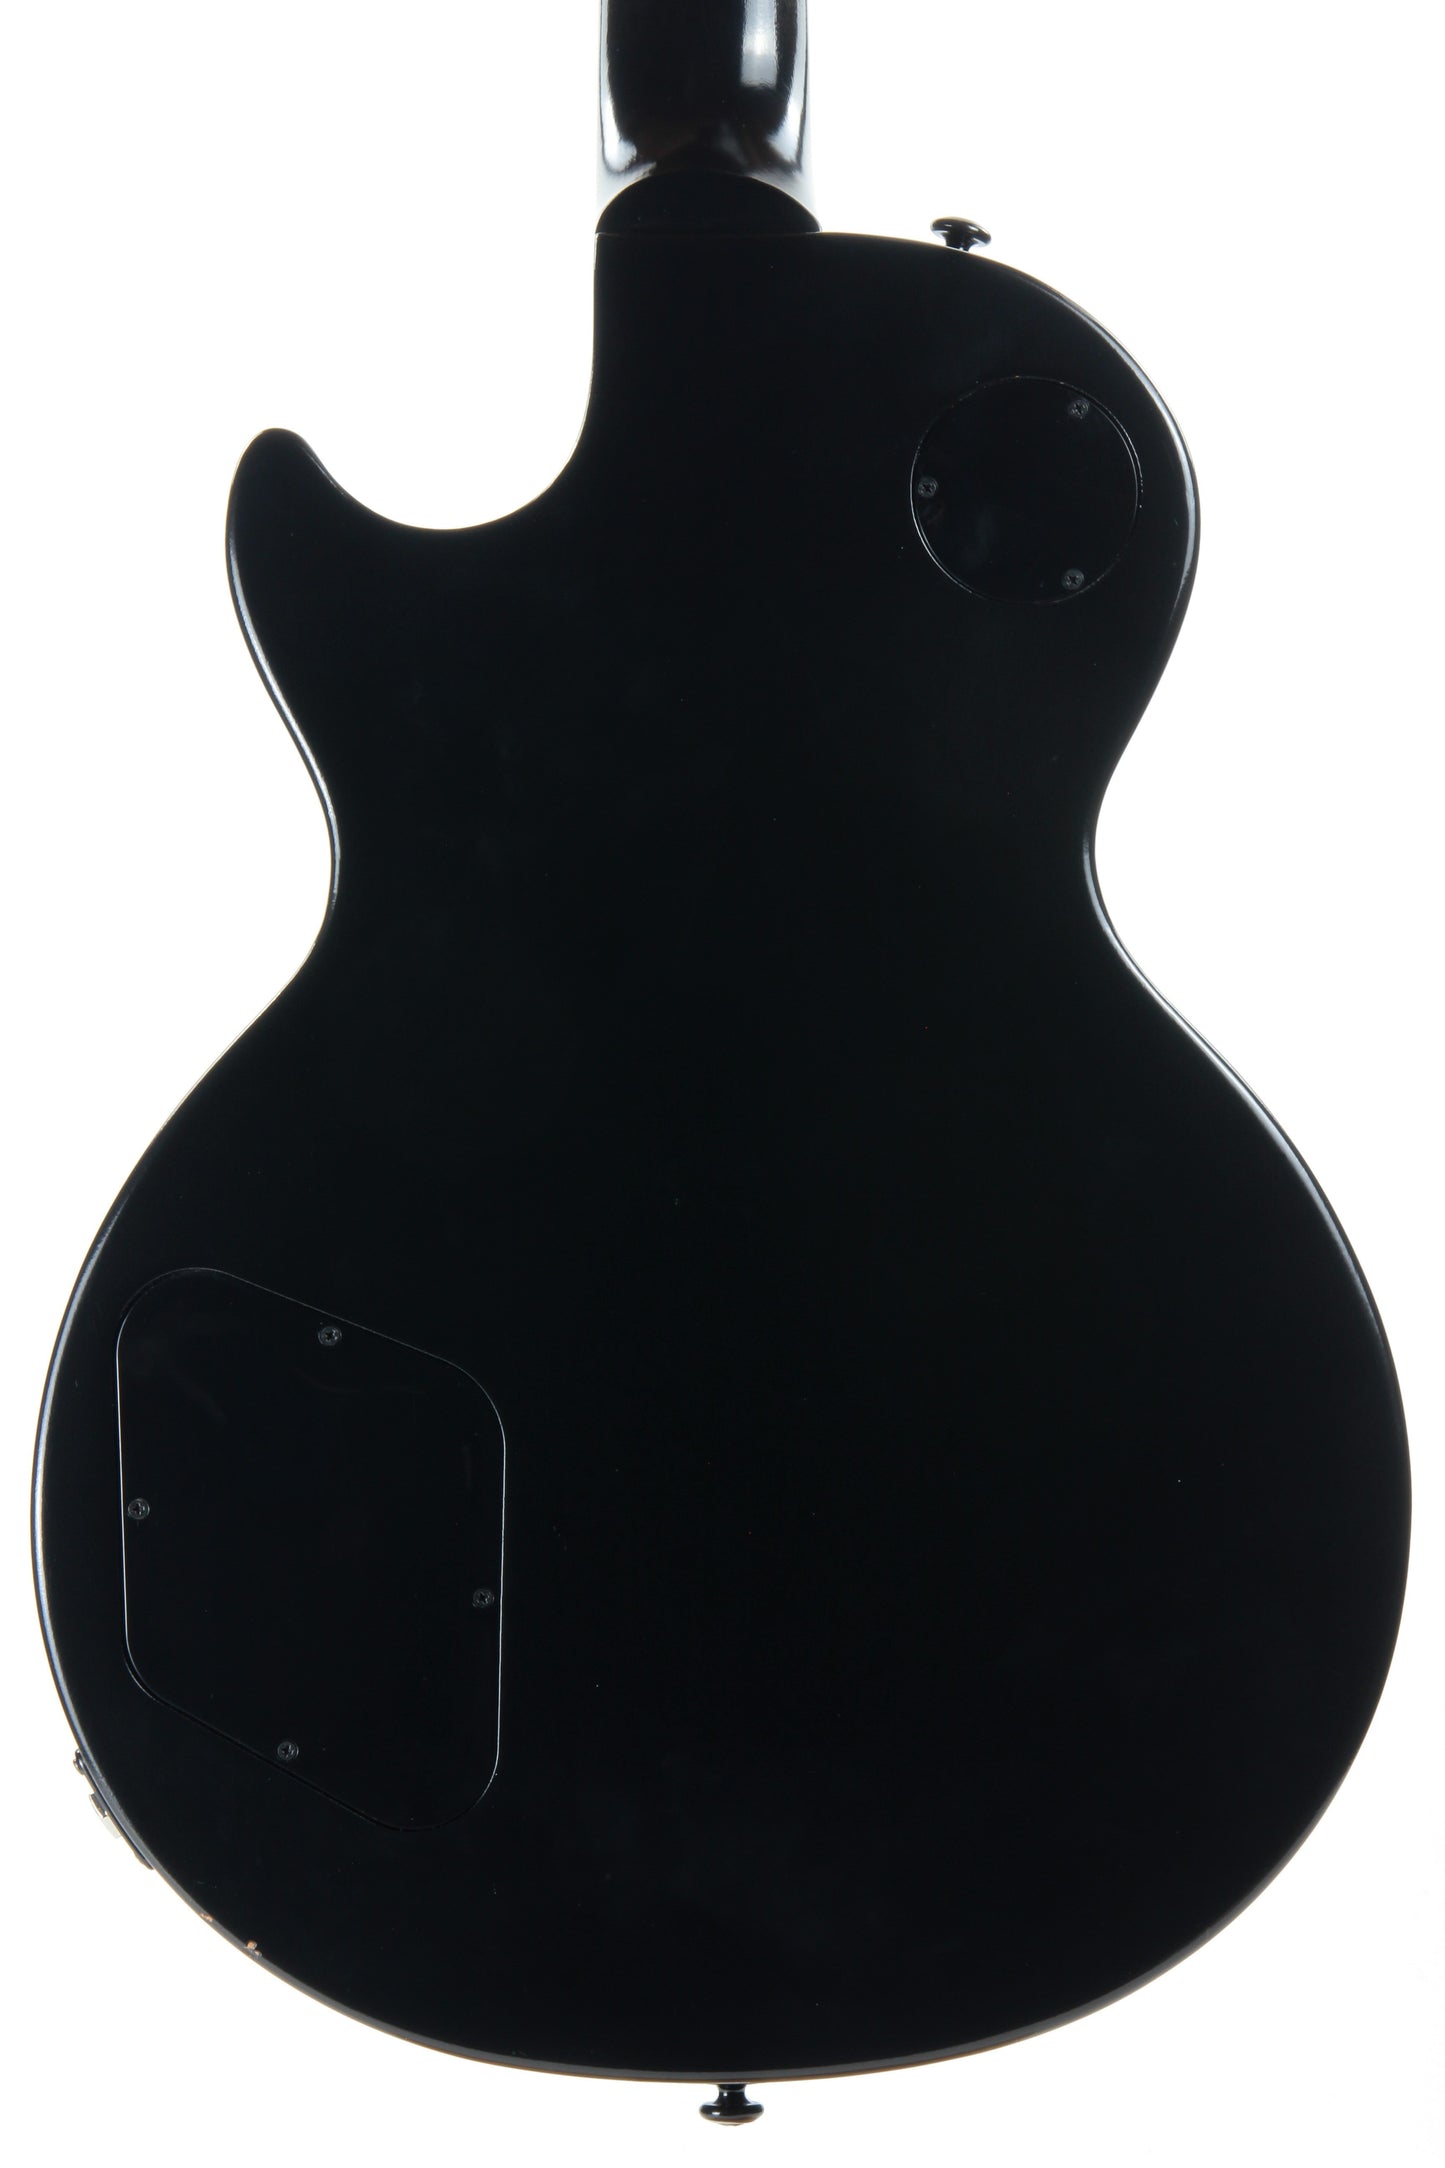 2019 Gibson Les Paul Dark Knight Limited Edition QUILT TOP - Ebony, Transparent Smoke Black Satin